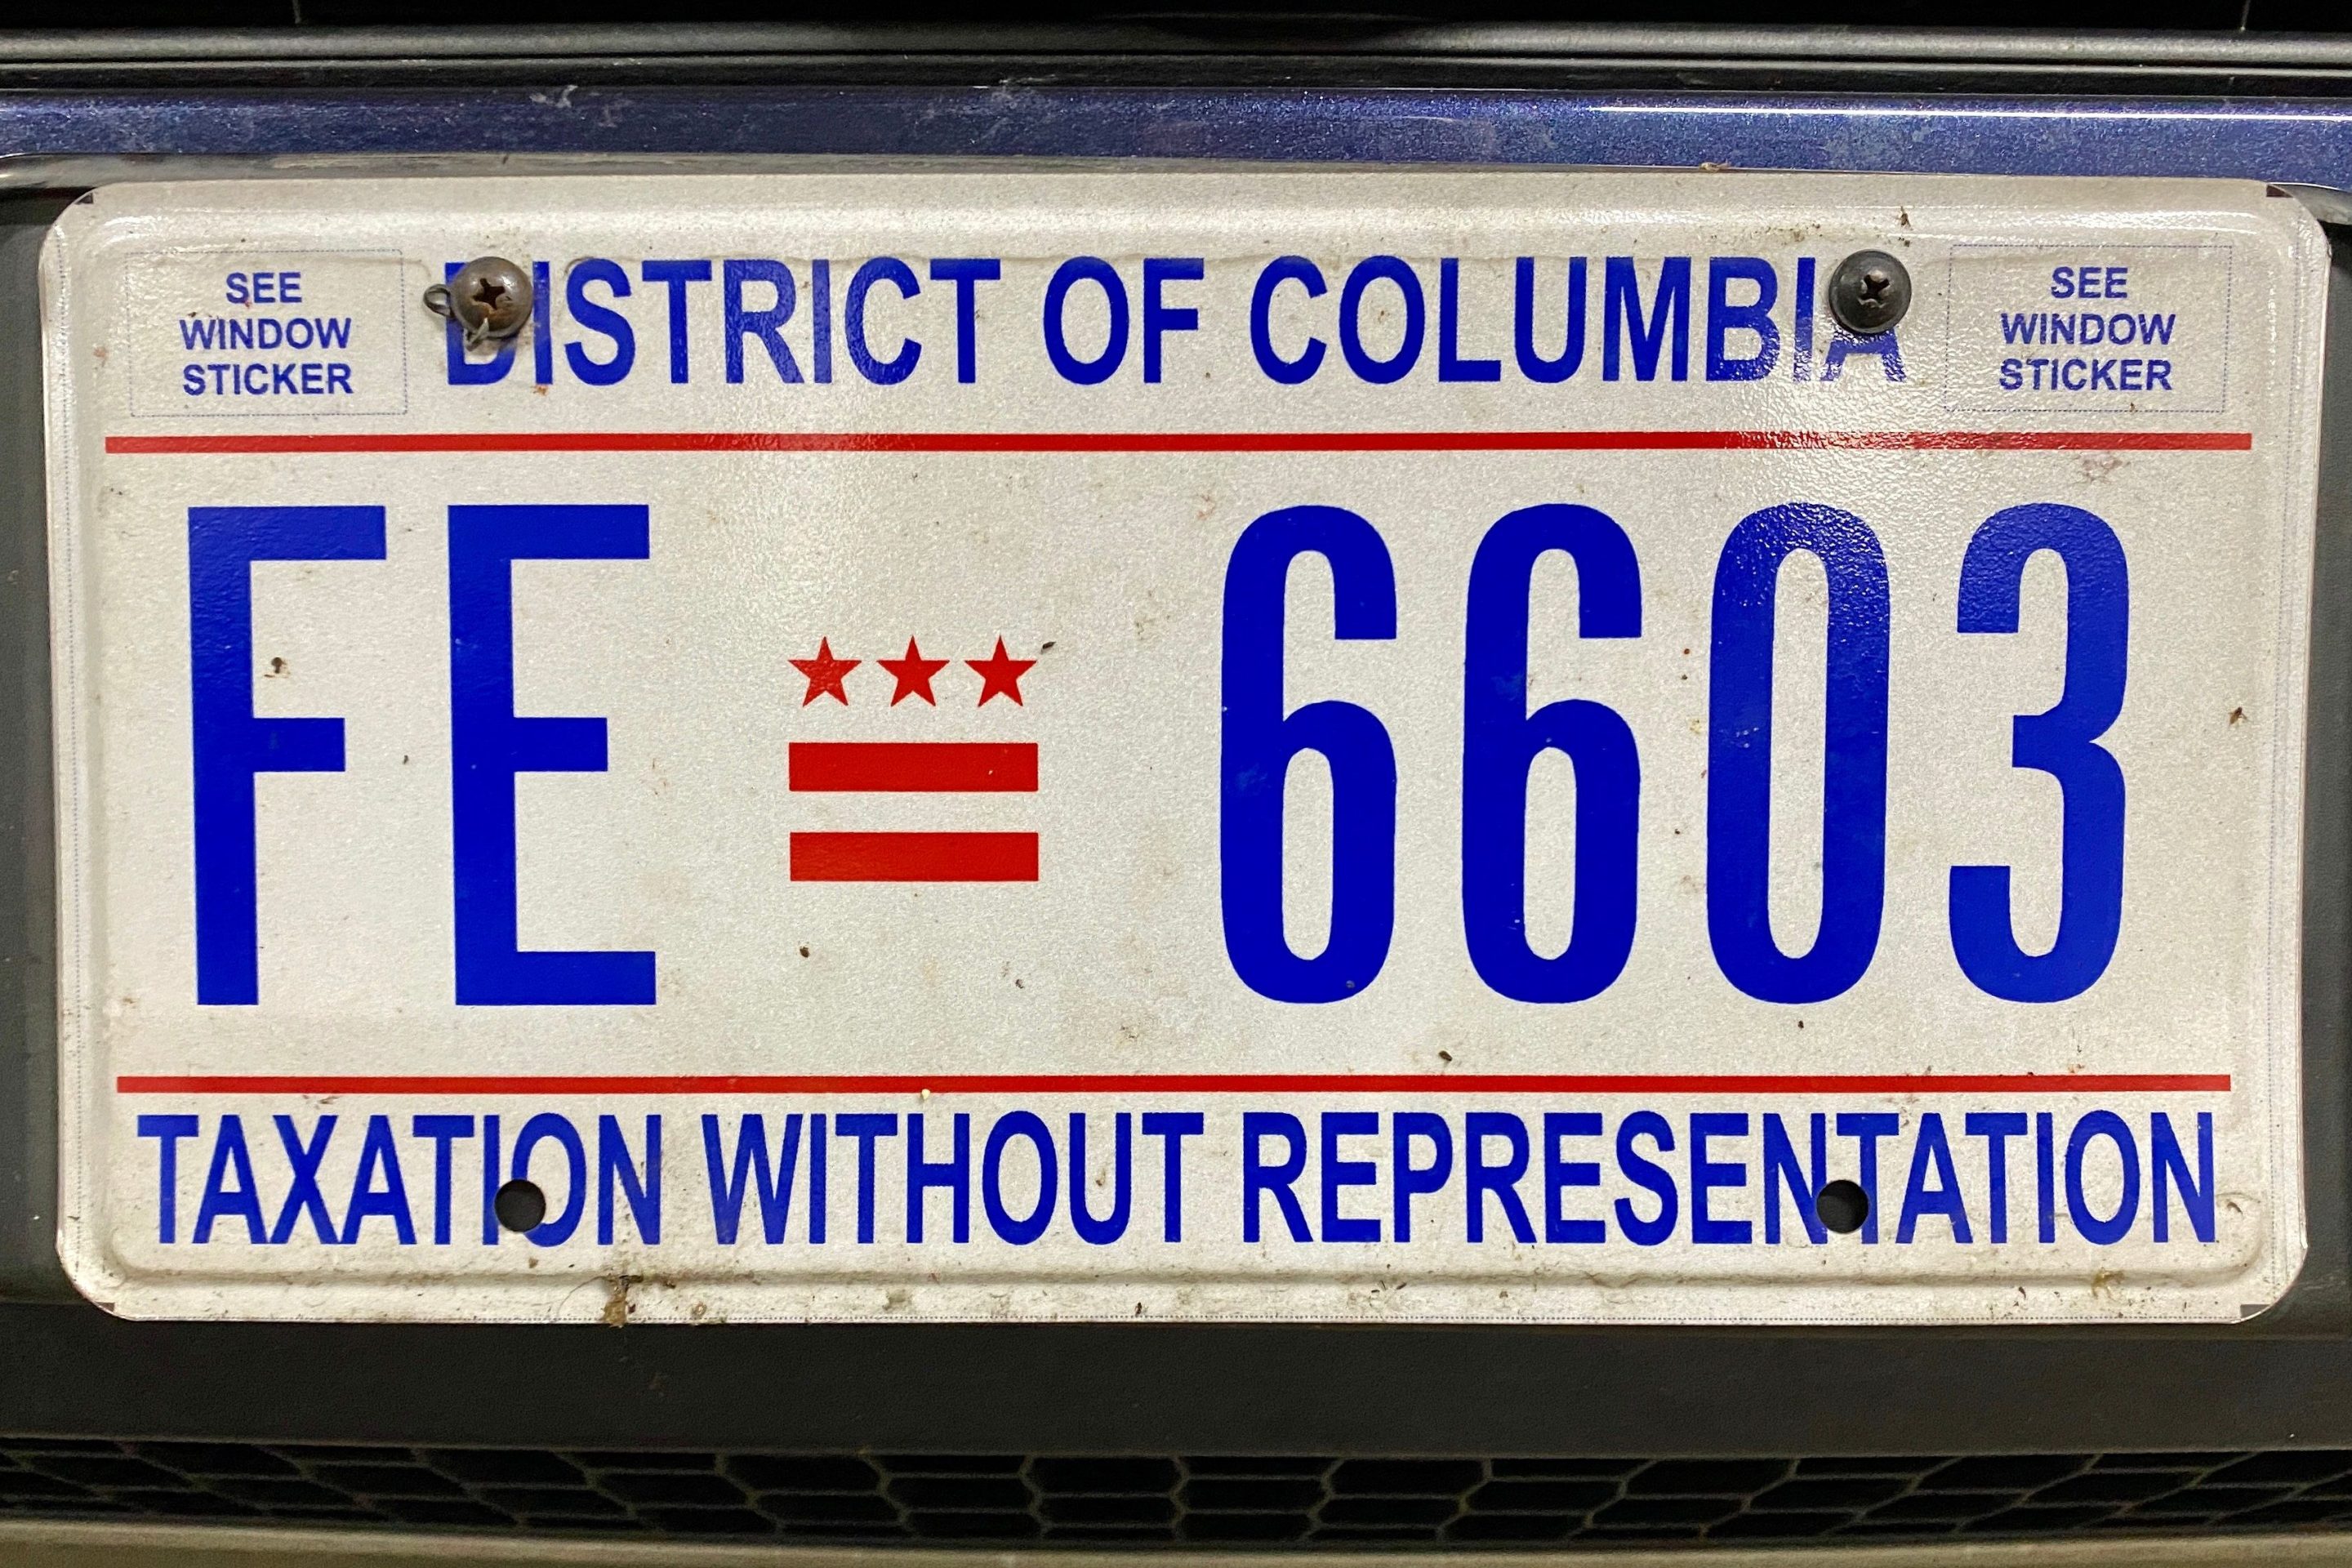 A Washington, D.C. license plate